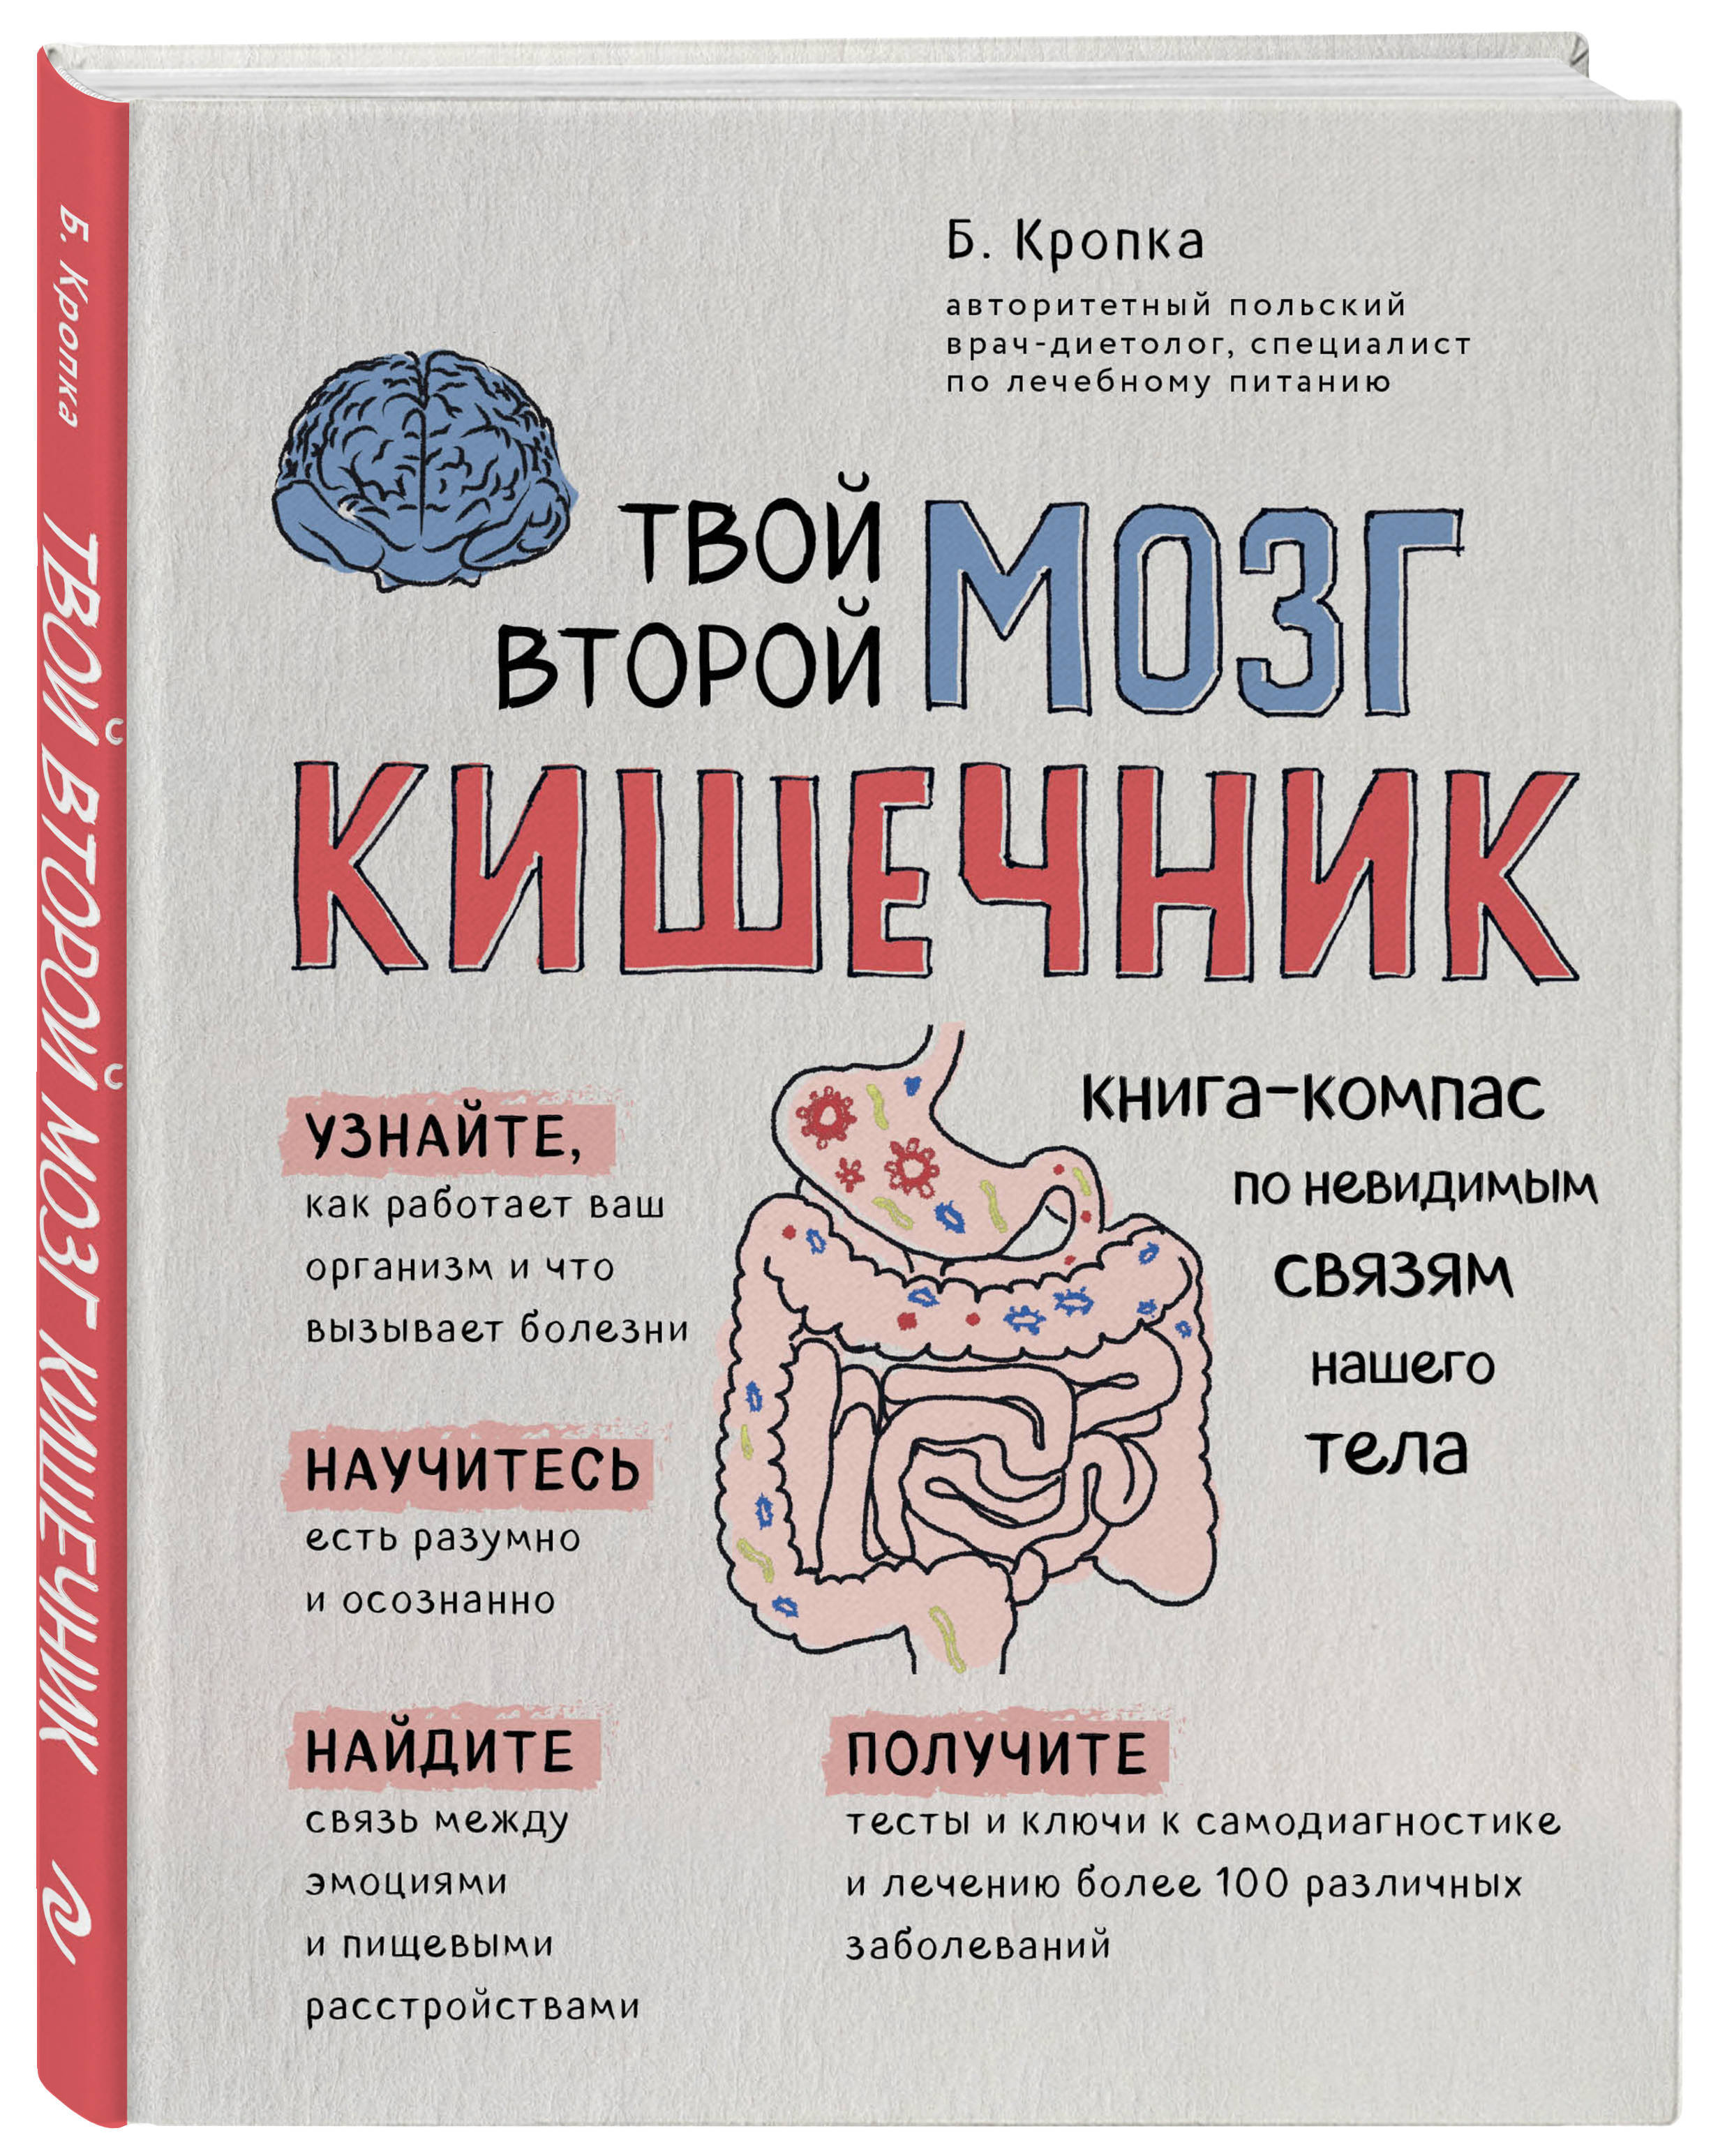 Книга тело еда. Кишечник наш второй мозг книга. Книга про кишечник. Кишечник и мозг книга.